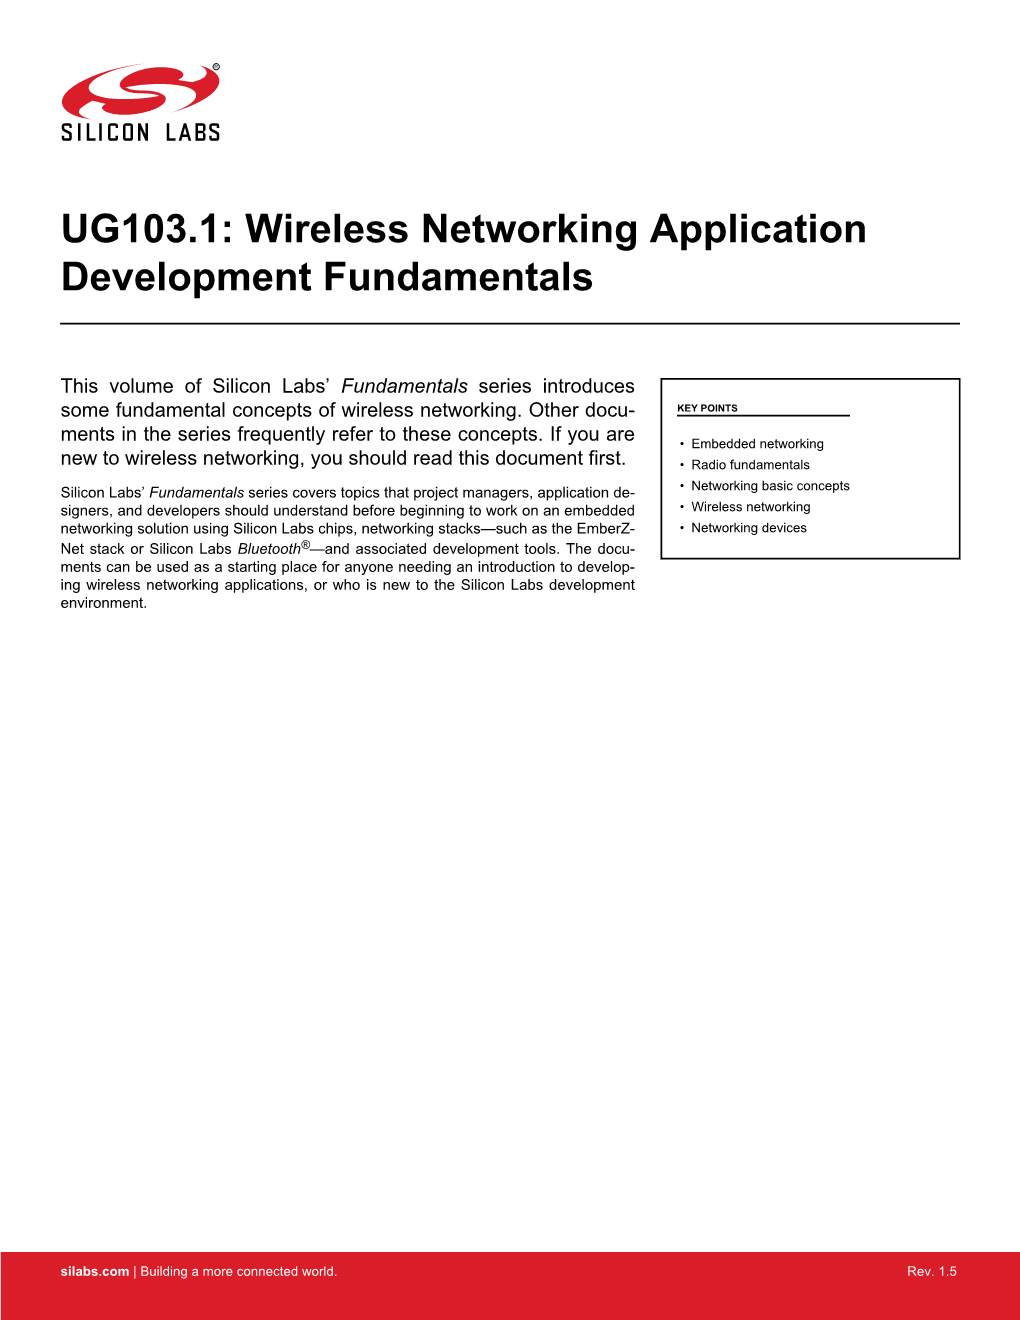 UG103.1: Wireless Networking Application Development Fundamentals